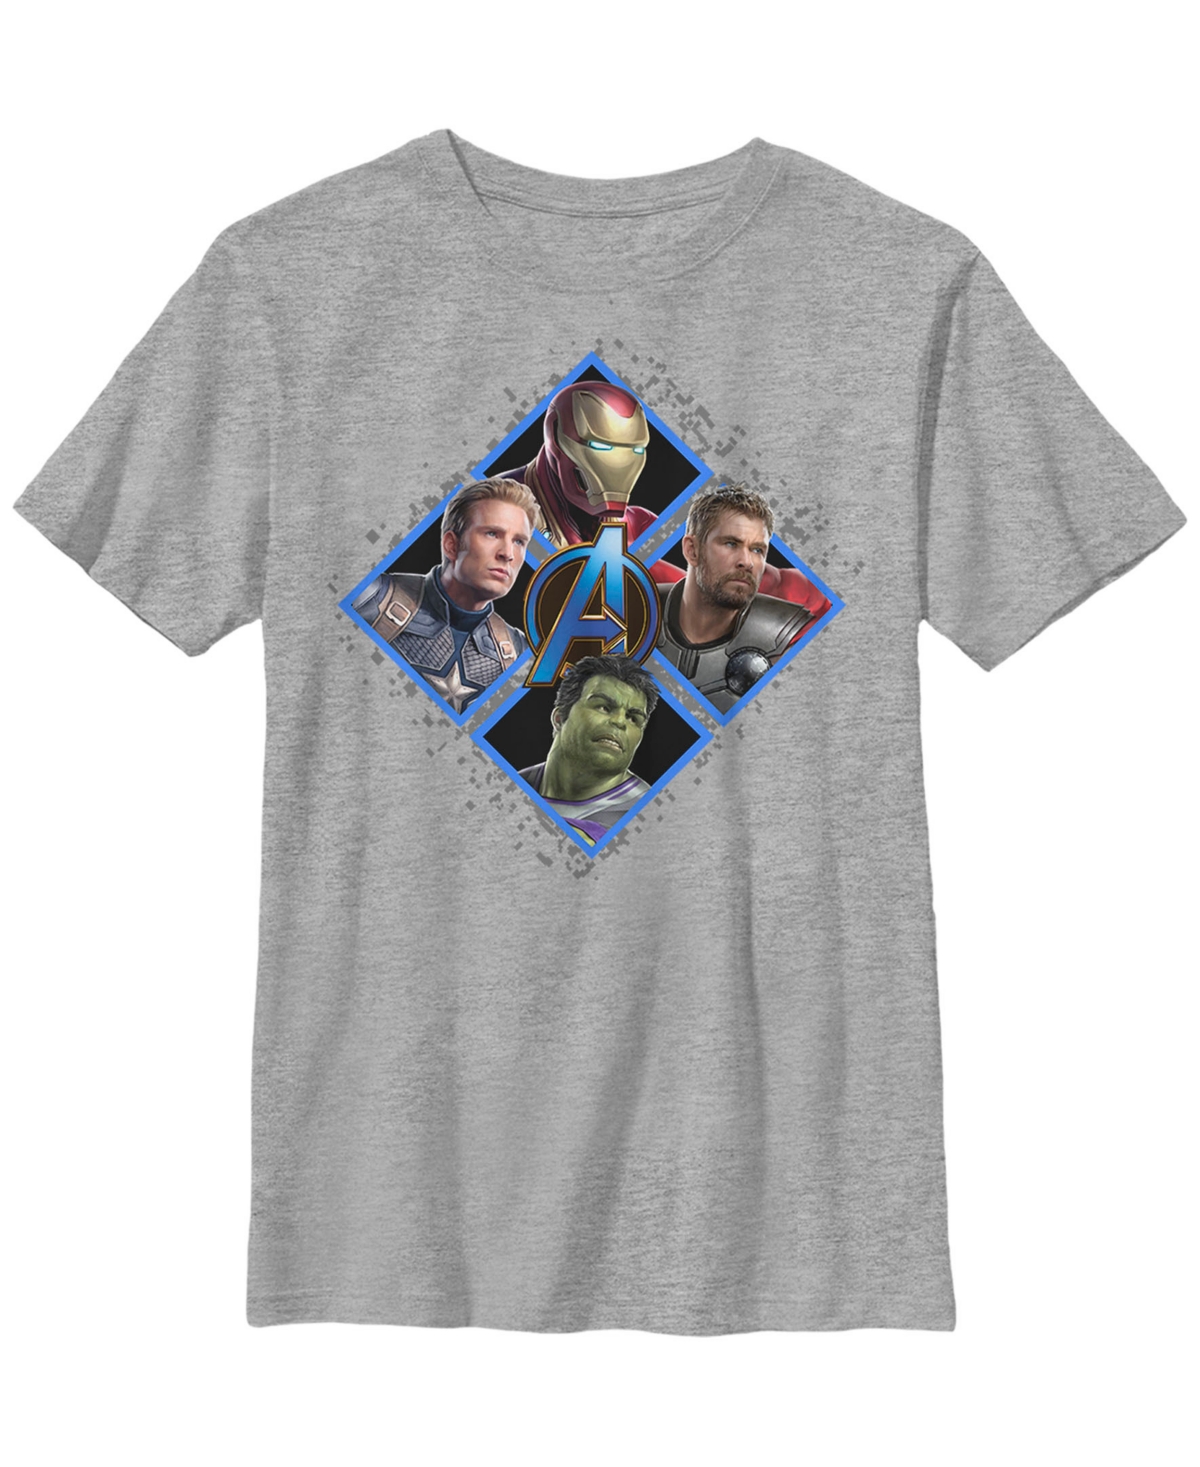 Fifth Sun Kids' Boy's Marvel Avengers: Endgame Hero Square Child T-shirt In Athletic Heather